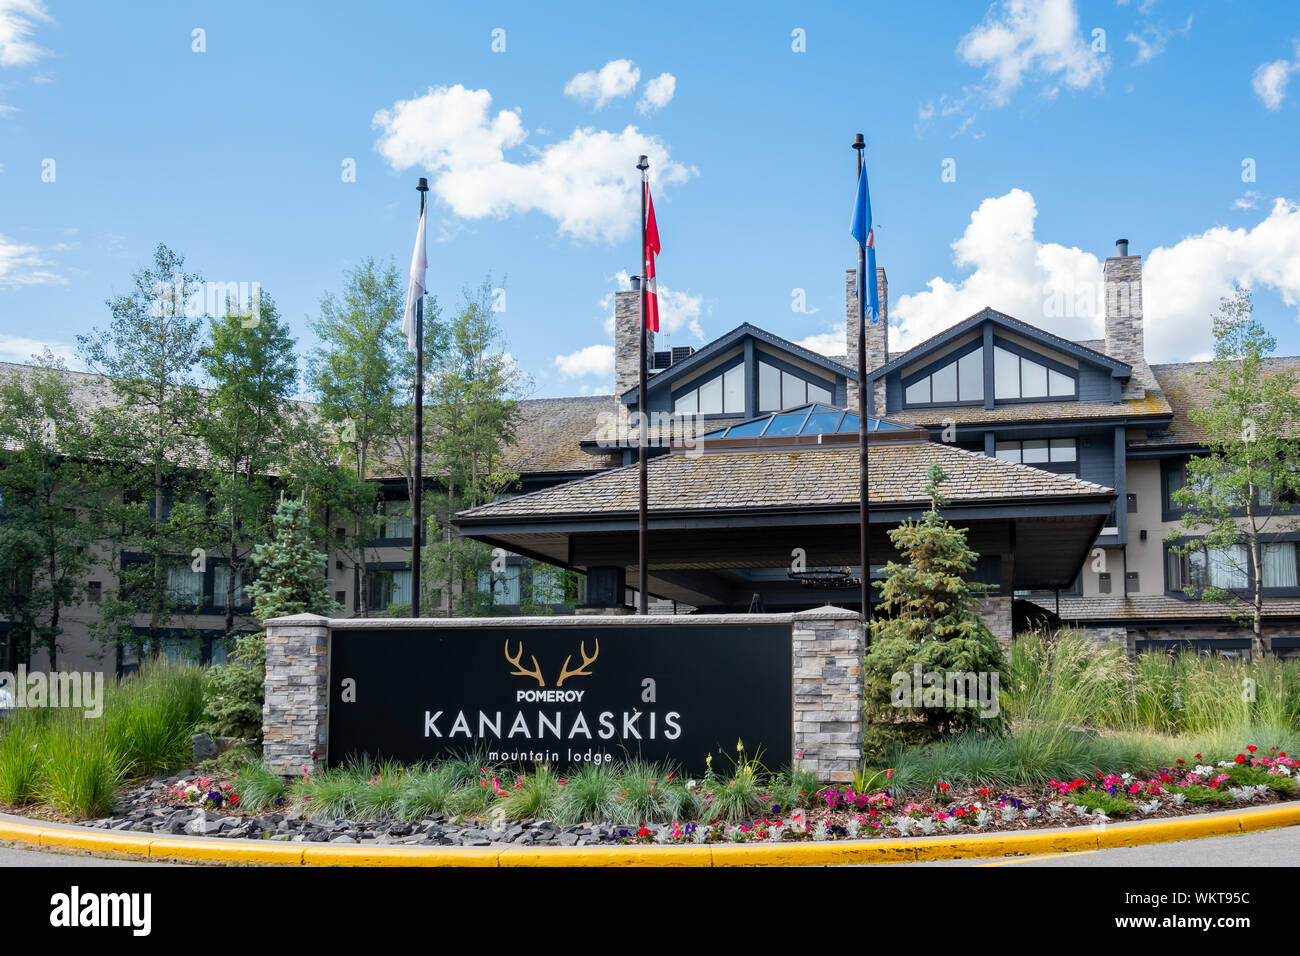 Banff, JUL 26: Exterior view of the Kananaskis Mountain Lodge on JUL 26, 2019 at Banff, Canada Stock Photo